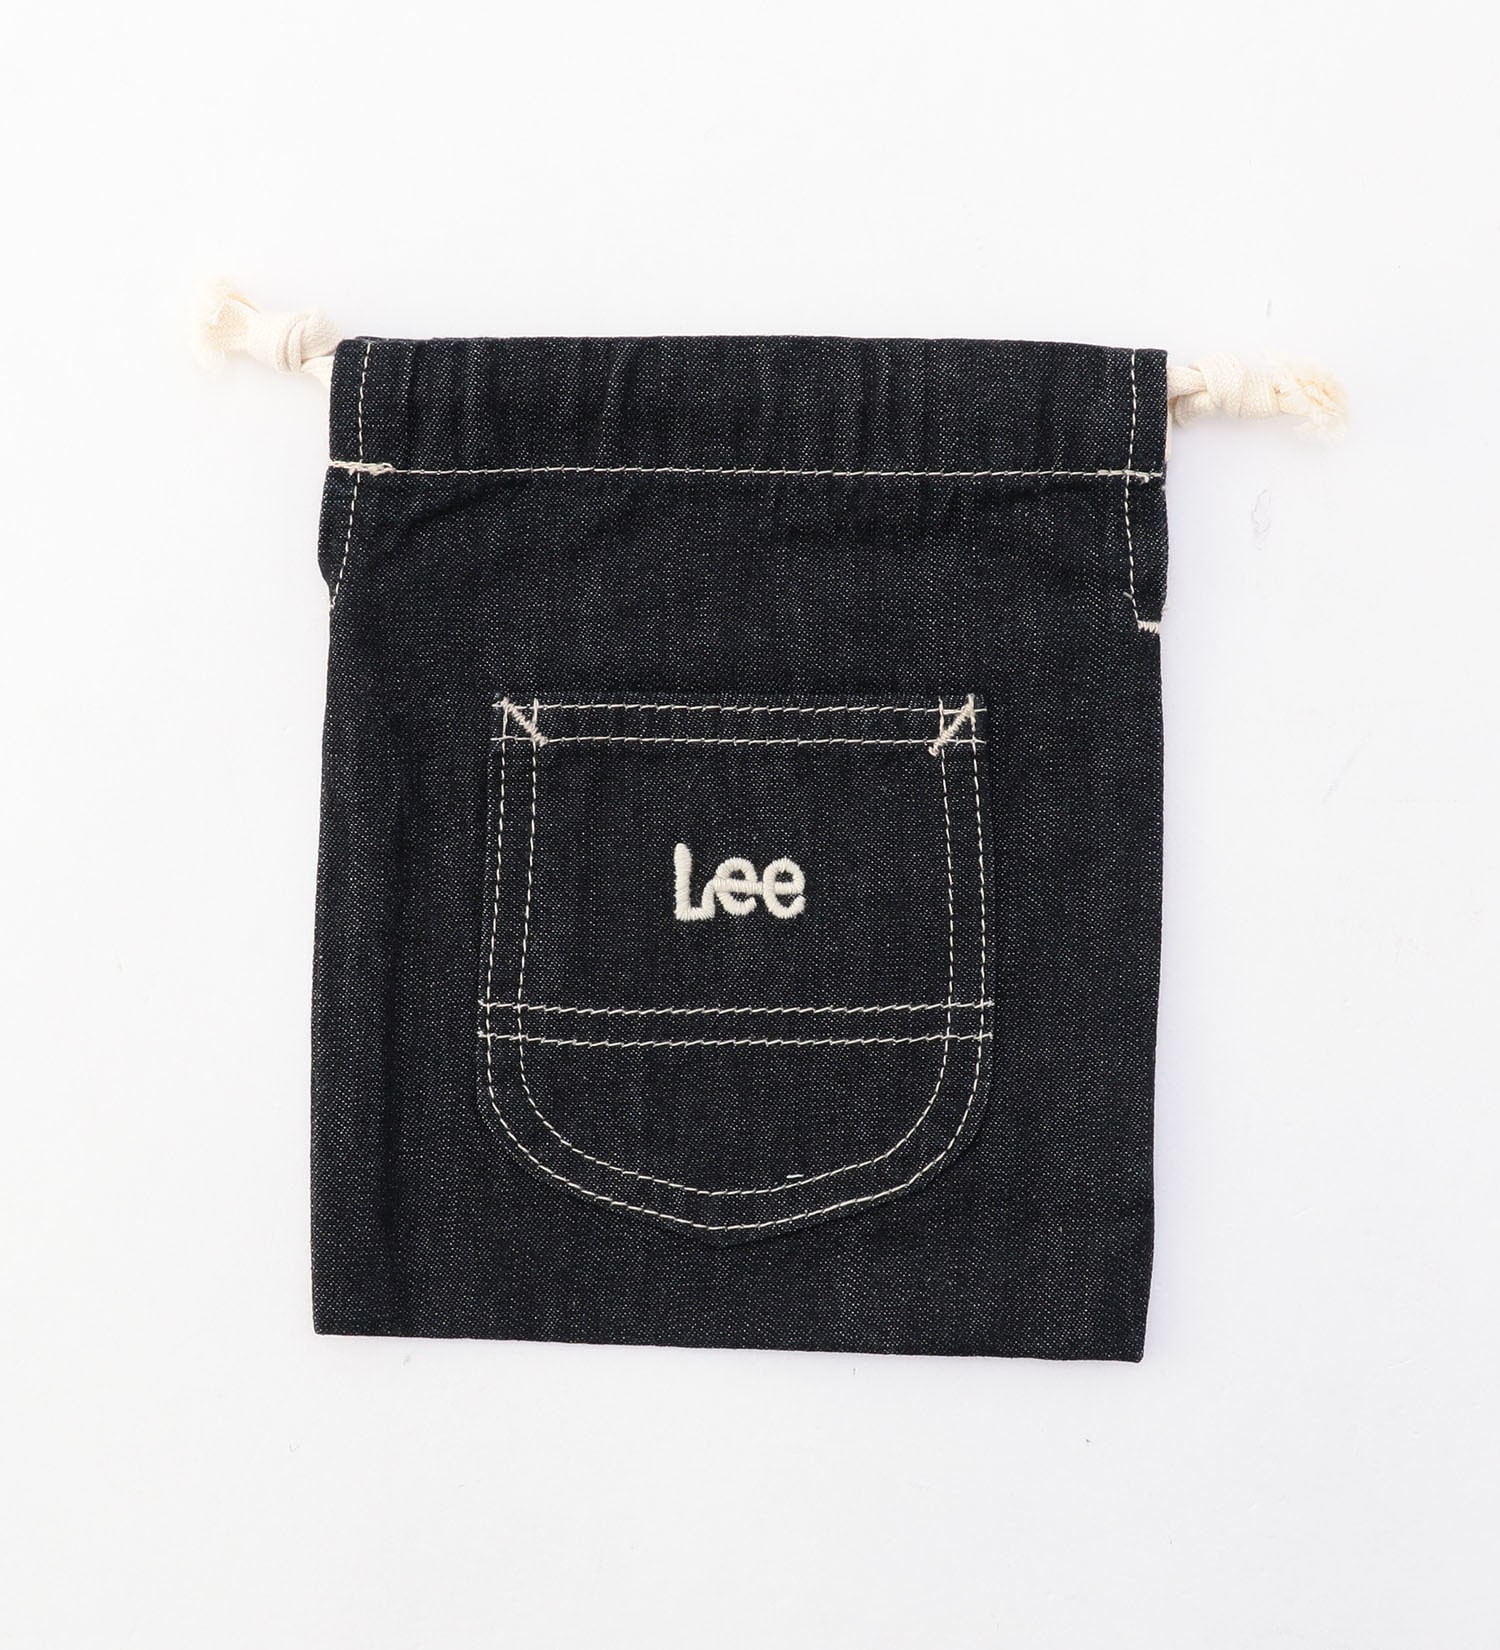 Lee(リー)の巾着バッグ SMALL|バッグ/その他バッグ/キッズ|インディゴブルー